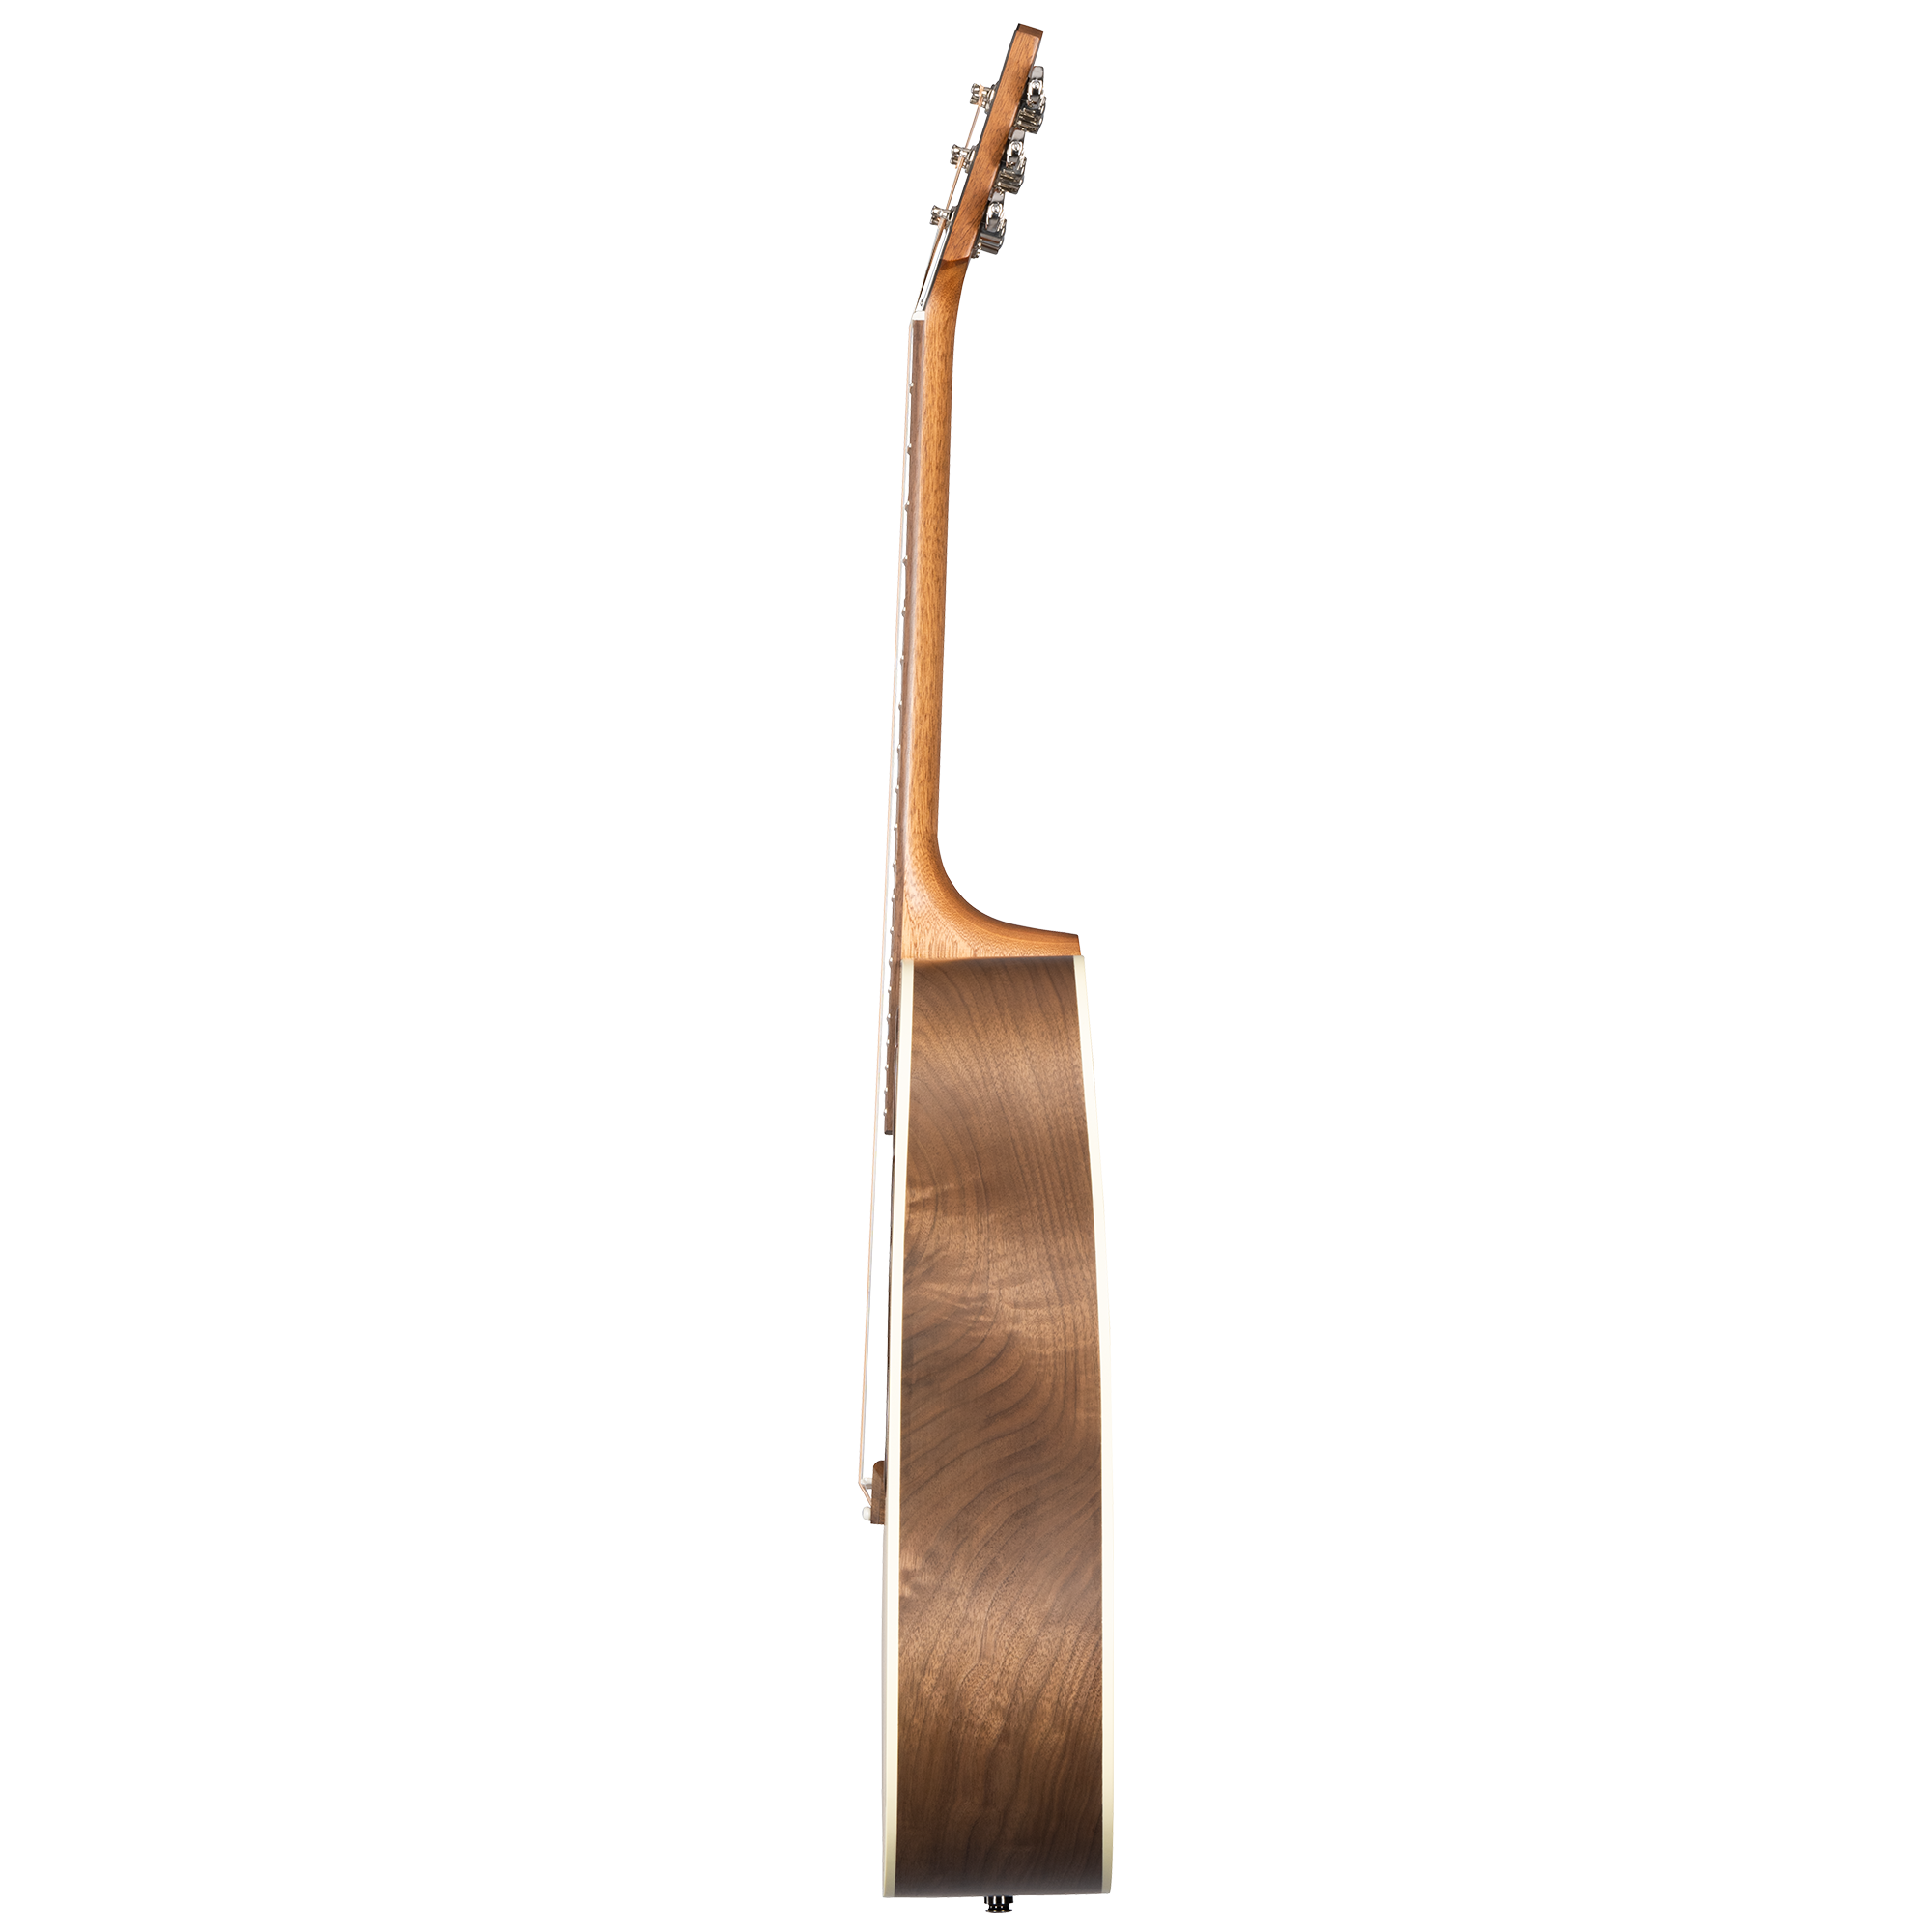 Gibson Hummingbird Studio Walnut Acoustic-electric Guitar - Natural